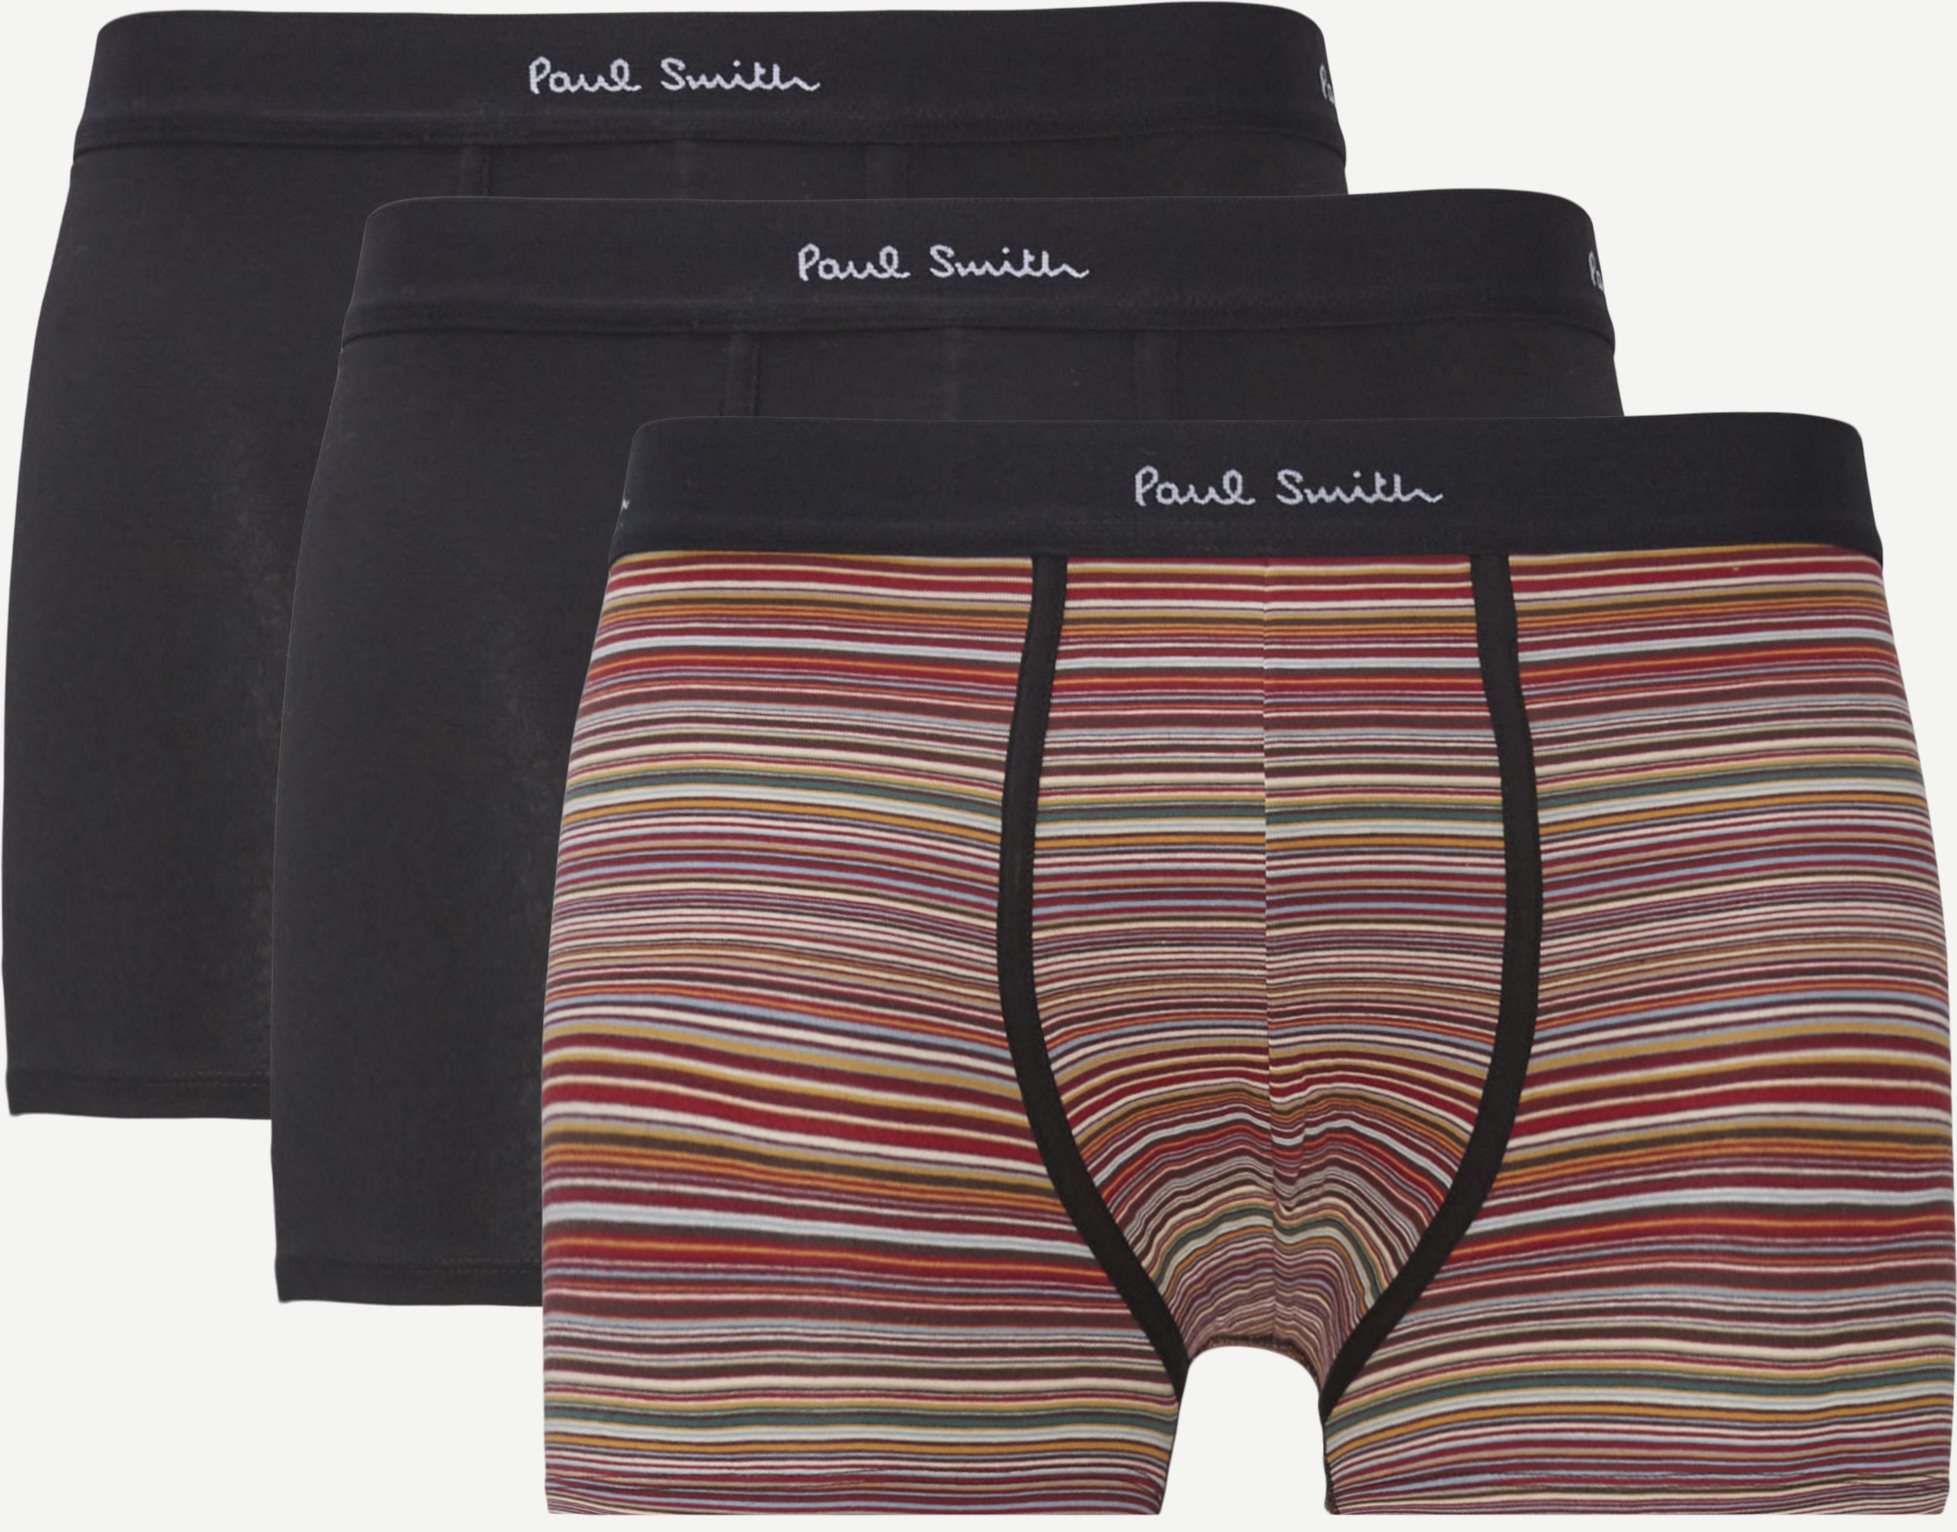 PS Paul Smith Underwear 914C A3PCKJ Black